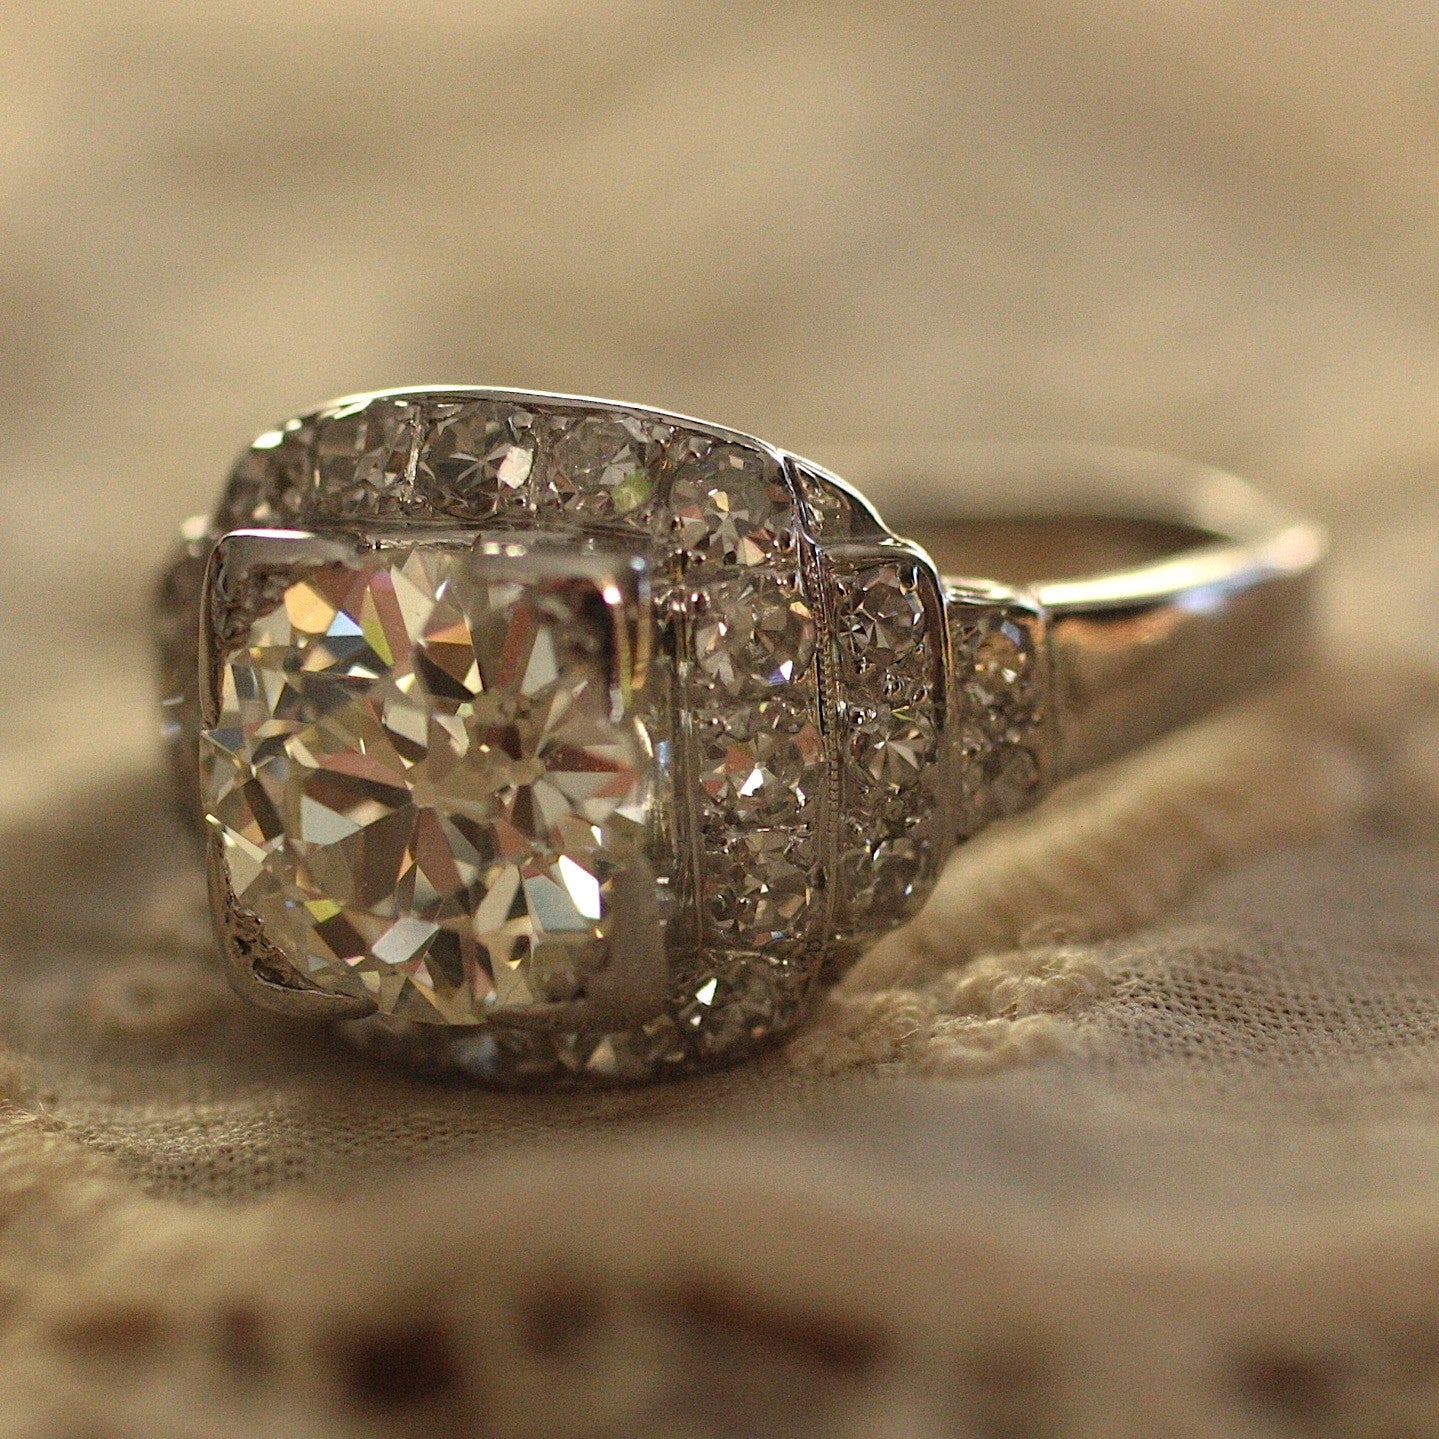 Circa 1920 1.75 Carat Diamond Ring